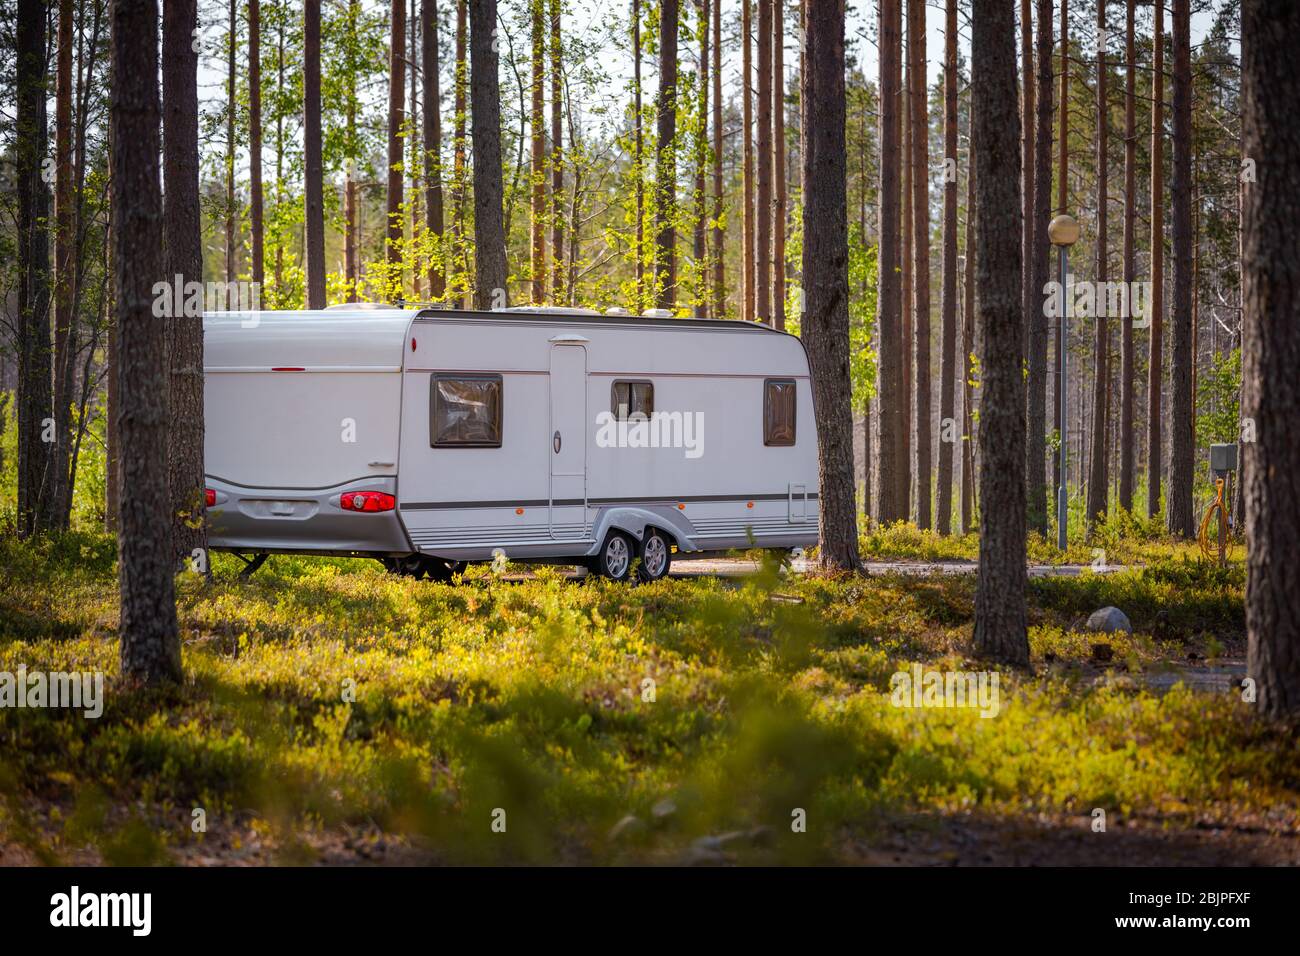 Vacances famille billet RV, vacances voyage en camping-car, caravane location de vacances. Banque D'Images